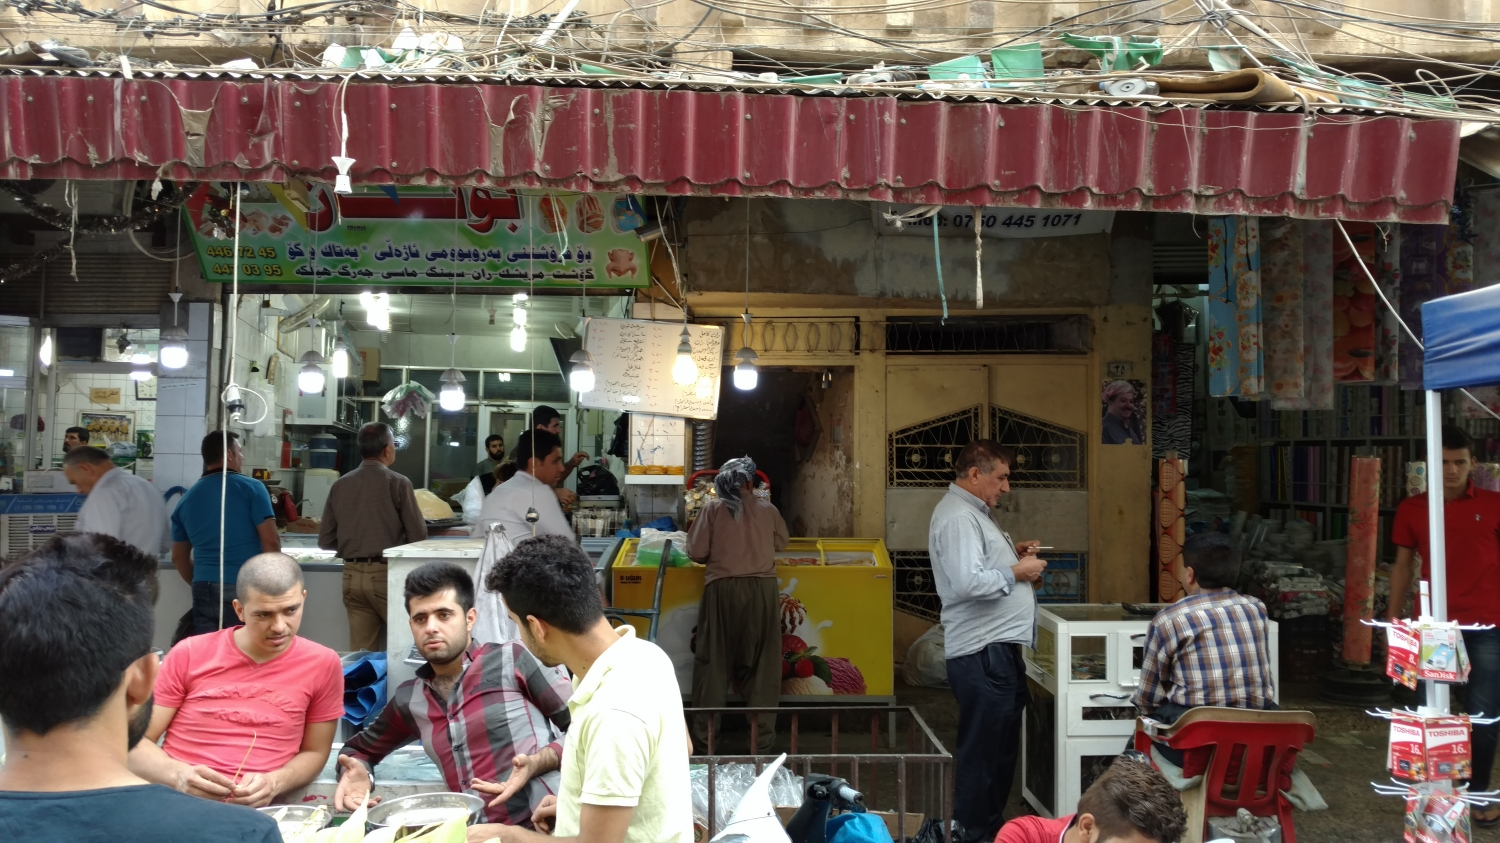 market scene in Slemani, Iraq